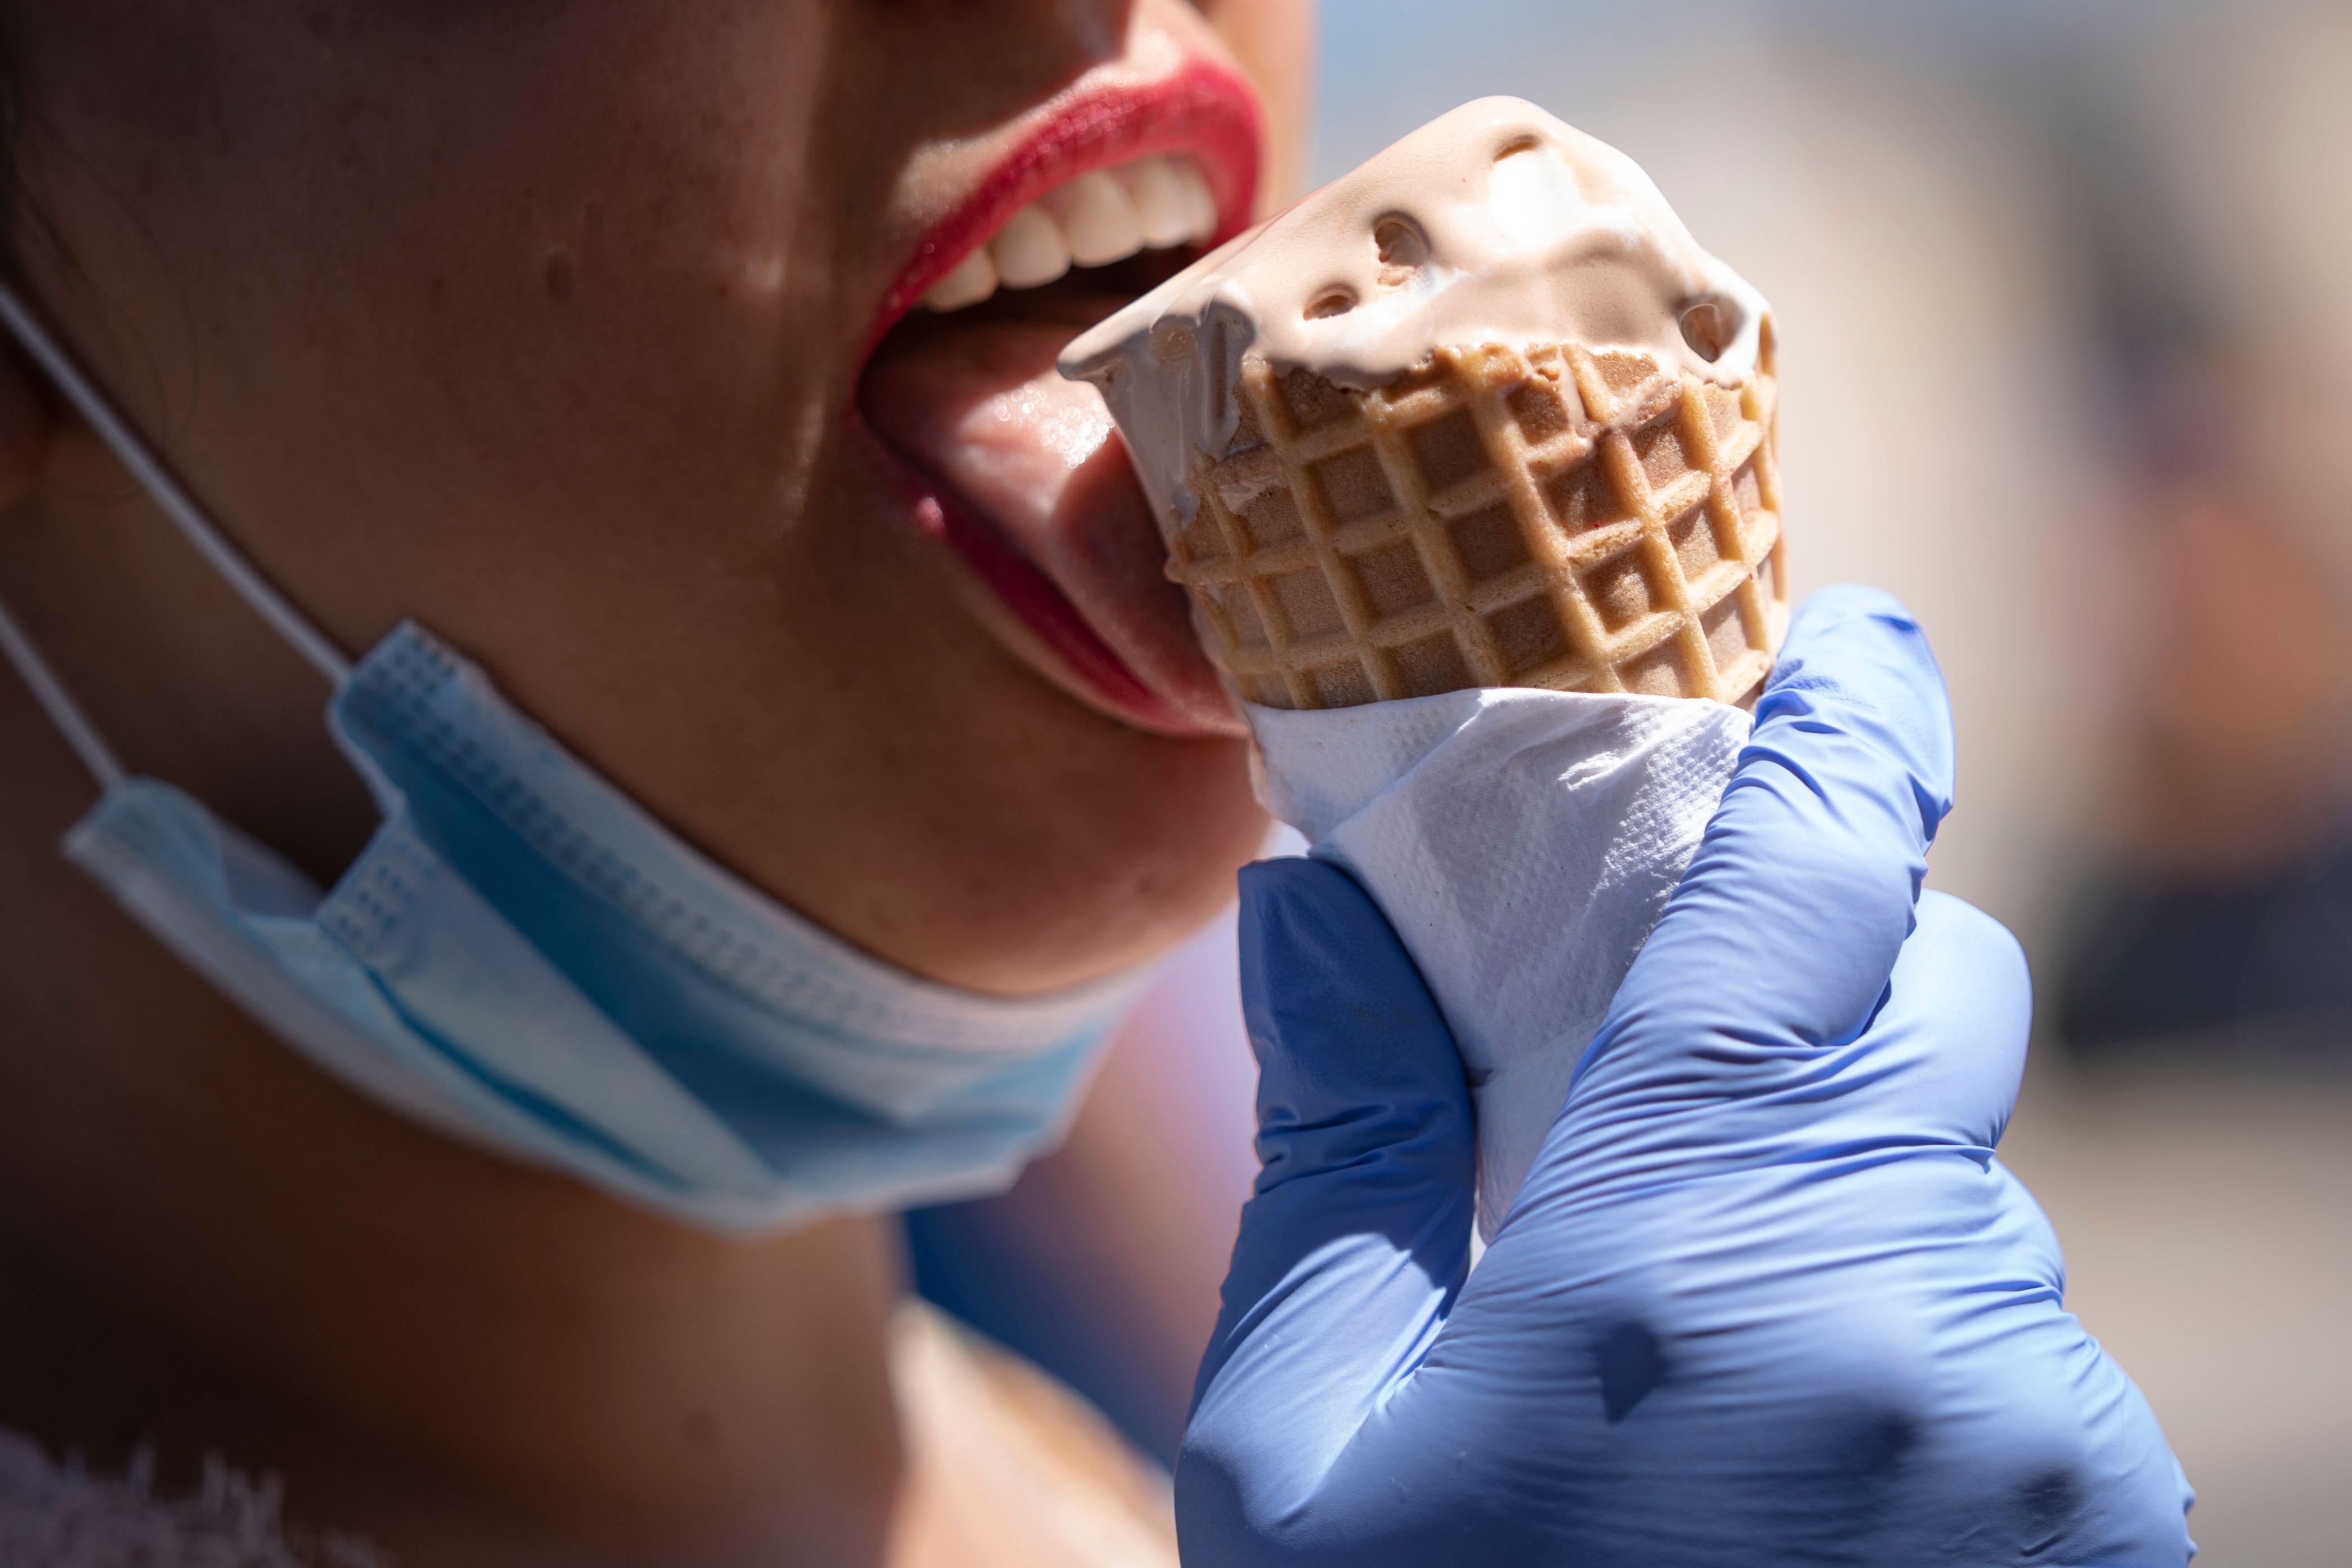 A woman wears gloves as she eats an ice cream cone.